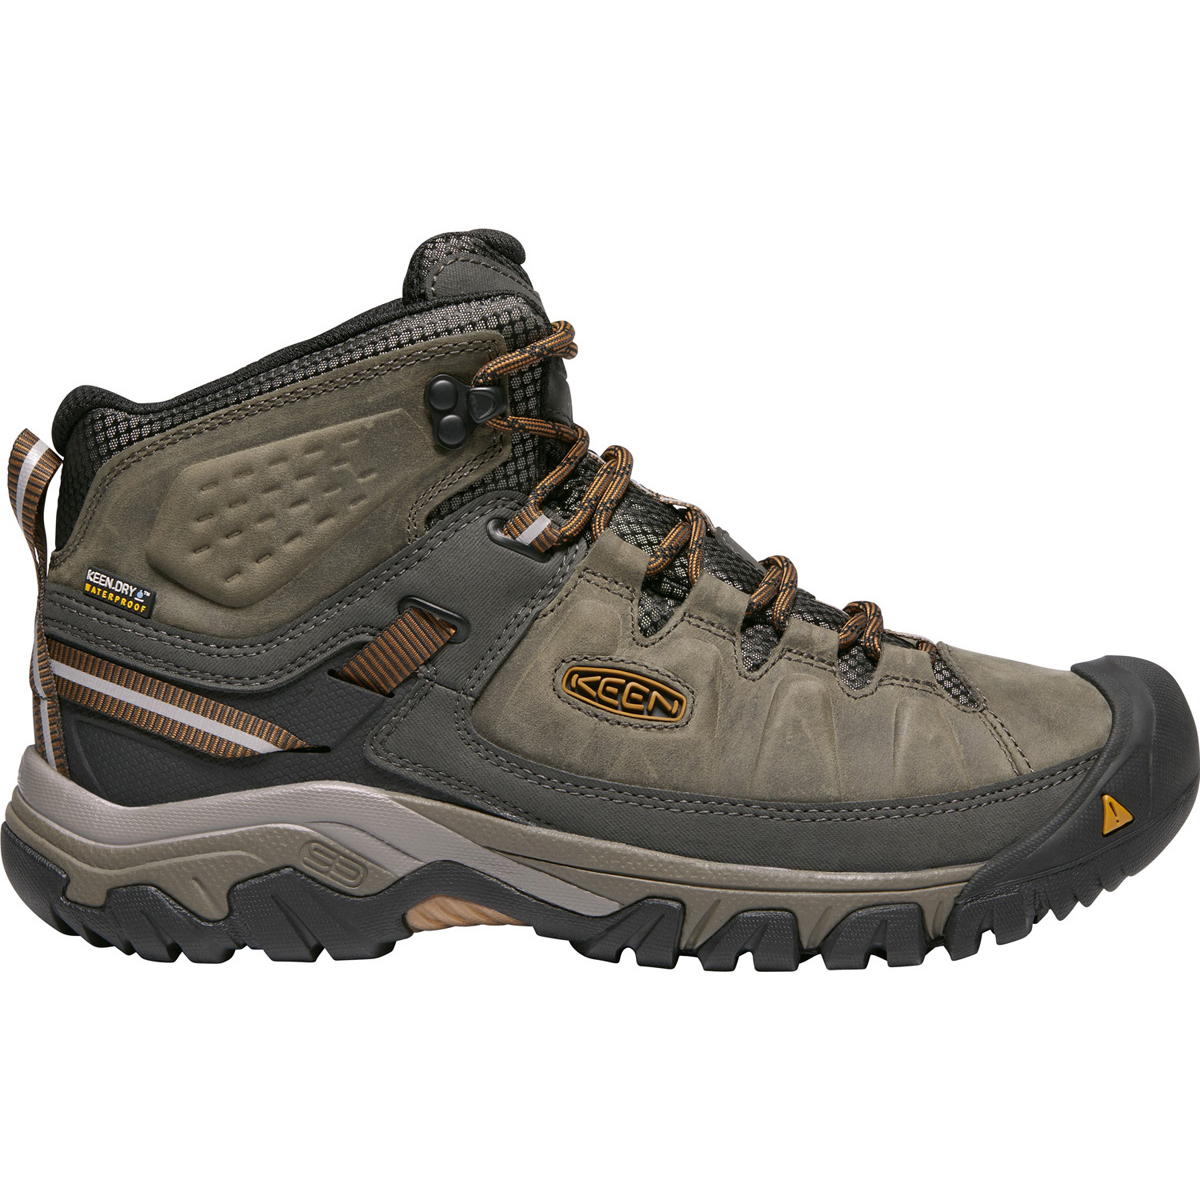 Keen Men's Targhee Iii Waterproof Mid Hiking Boots - Size 14